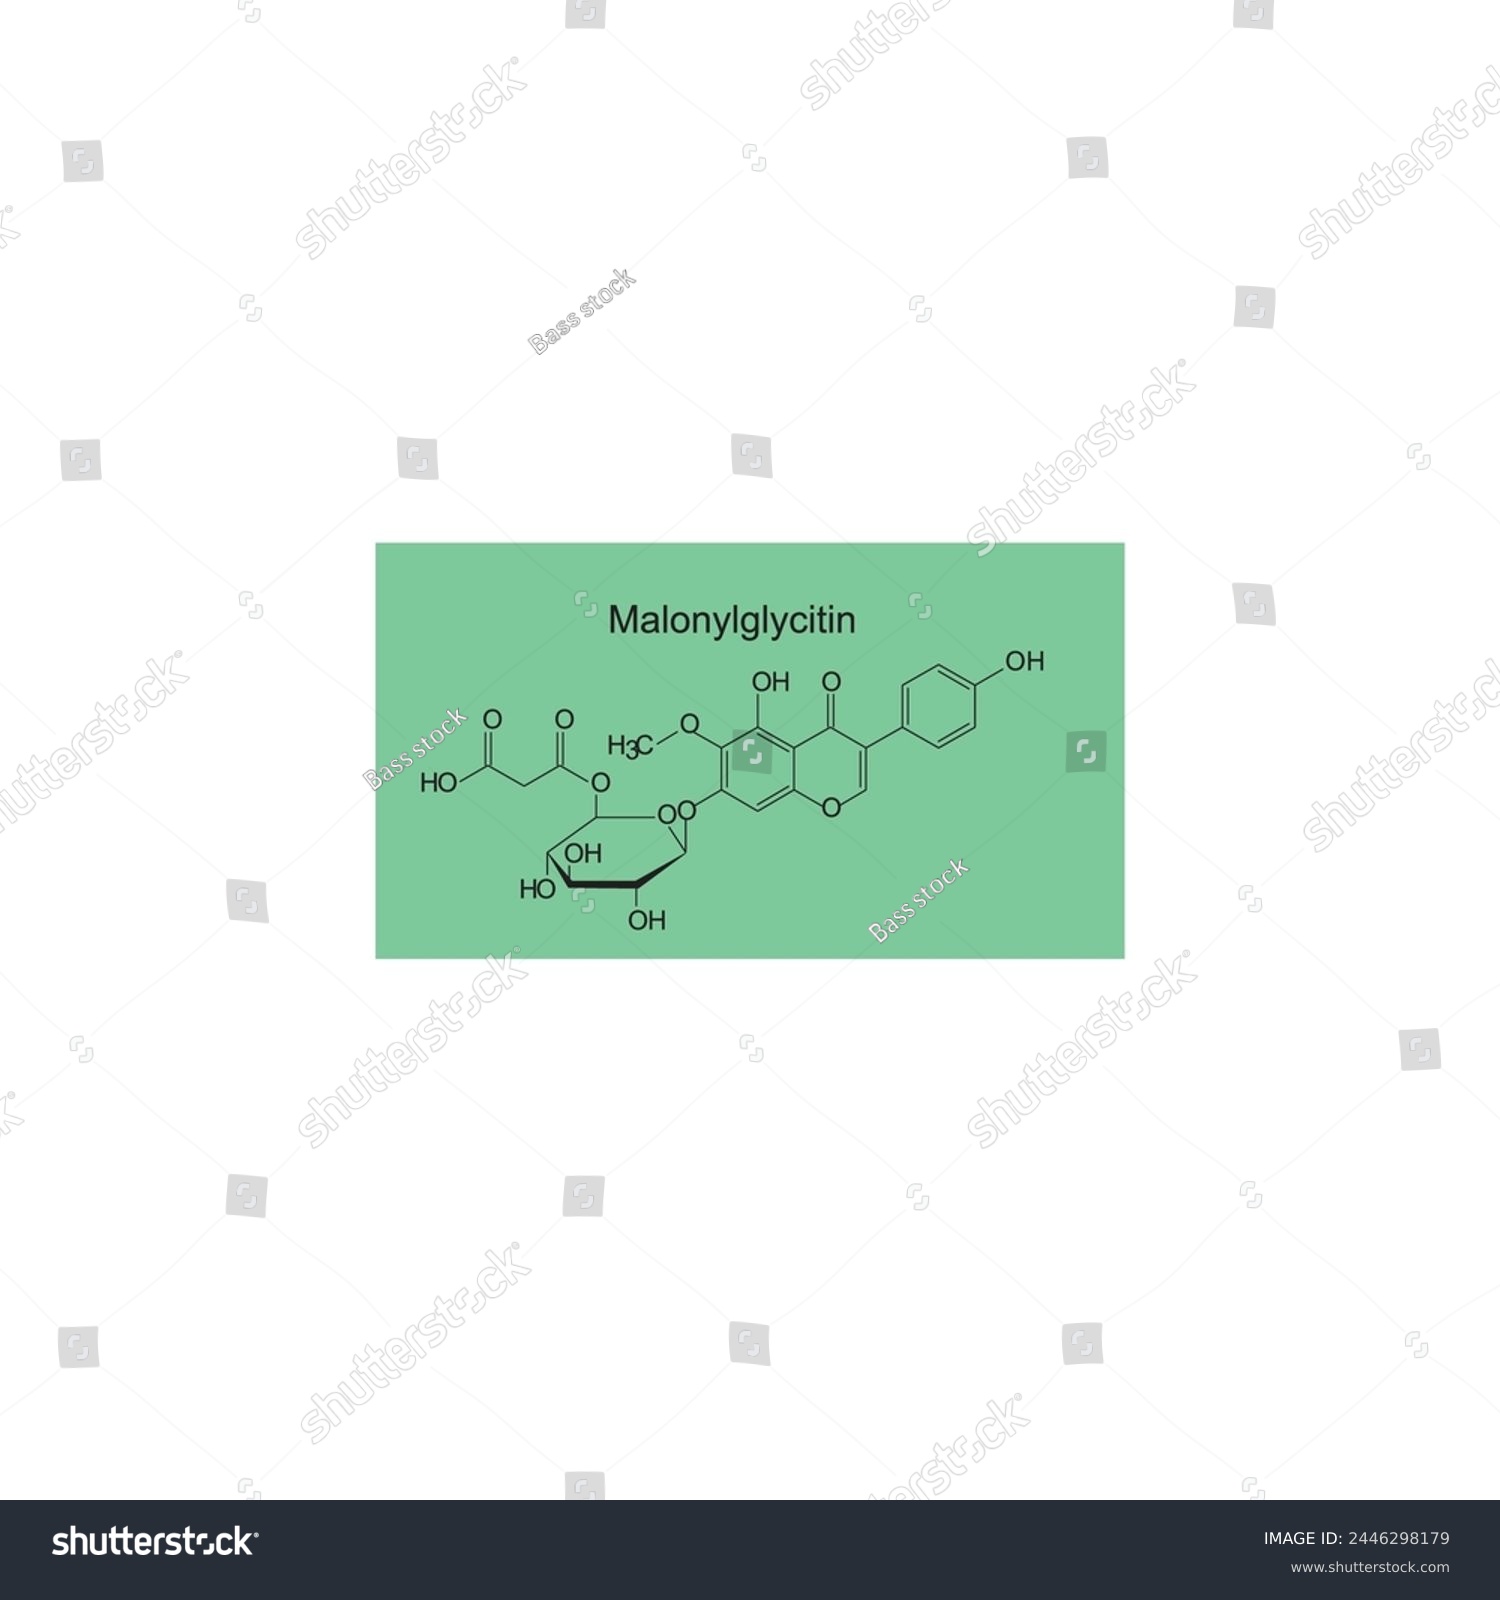 SVG of Malonylglycitin skeletal structure diagram. compound molecule scientific illustration on green background. svg